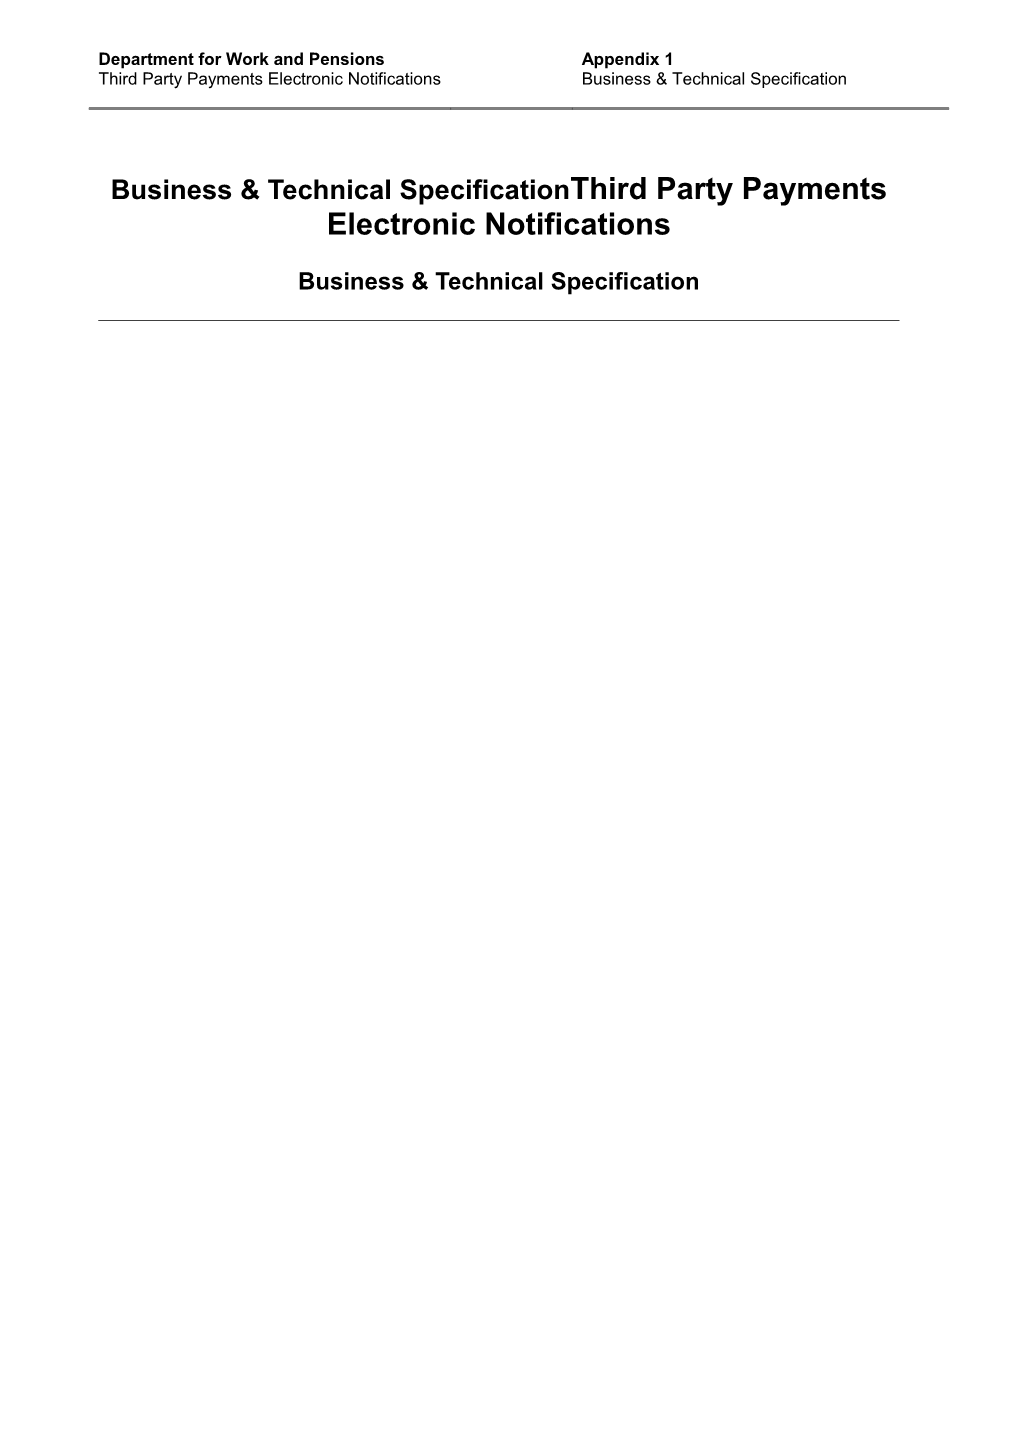 TPP/PACS Electronic Notifications